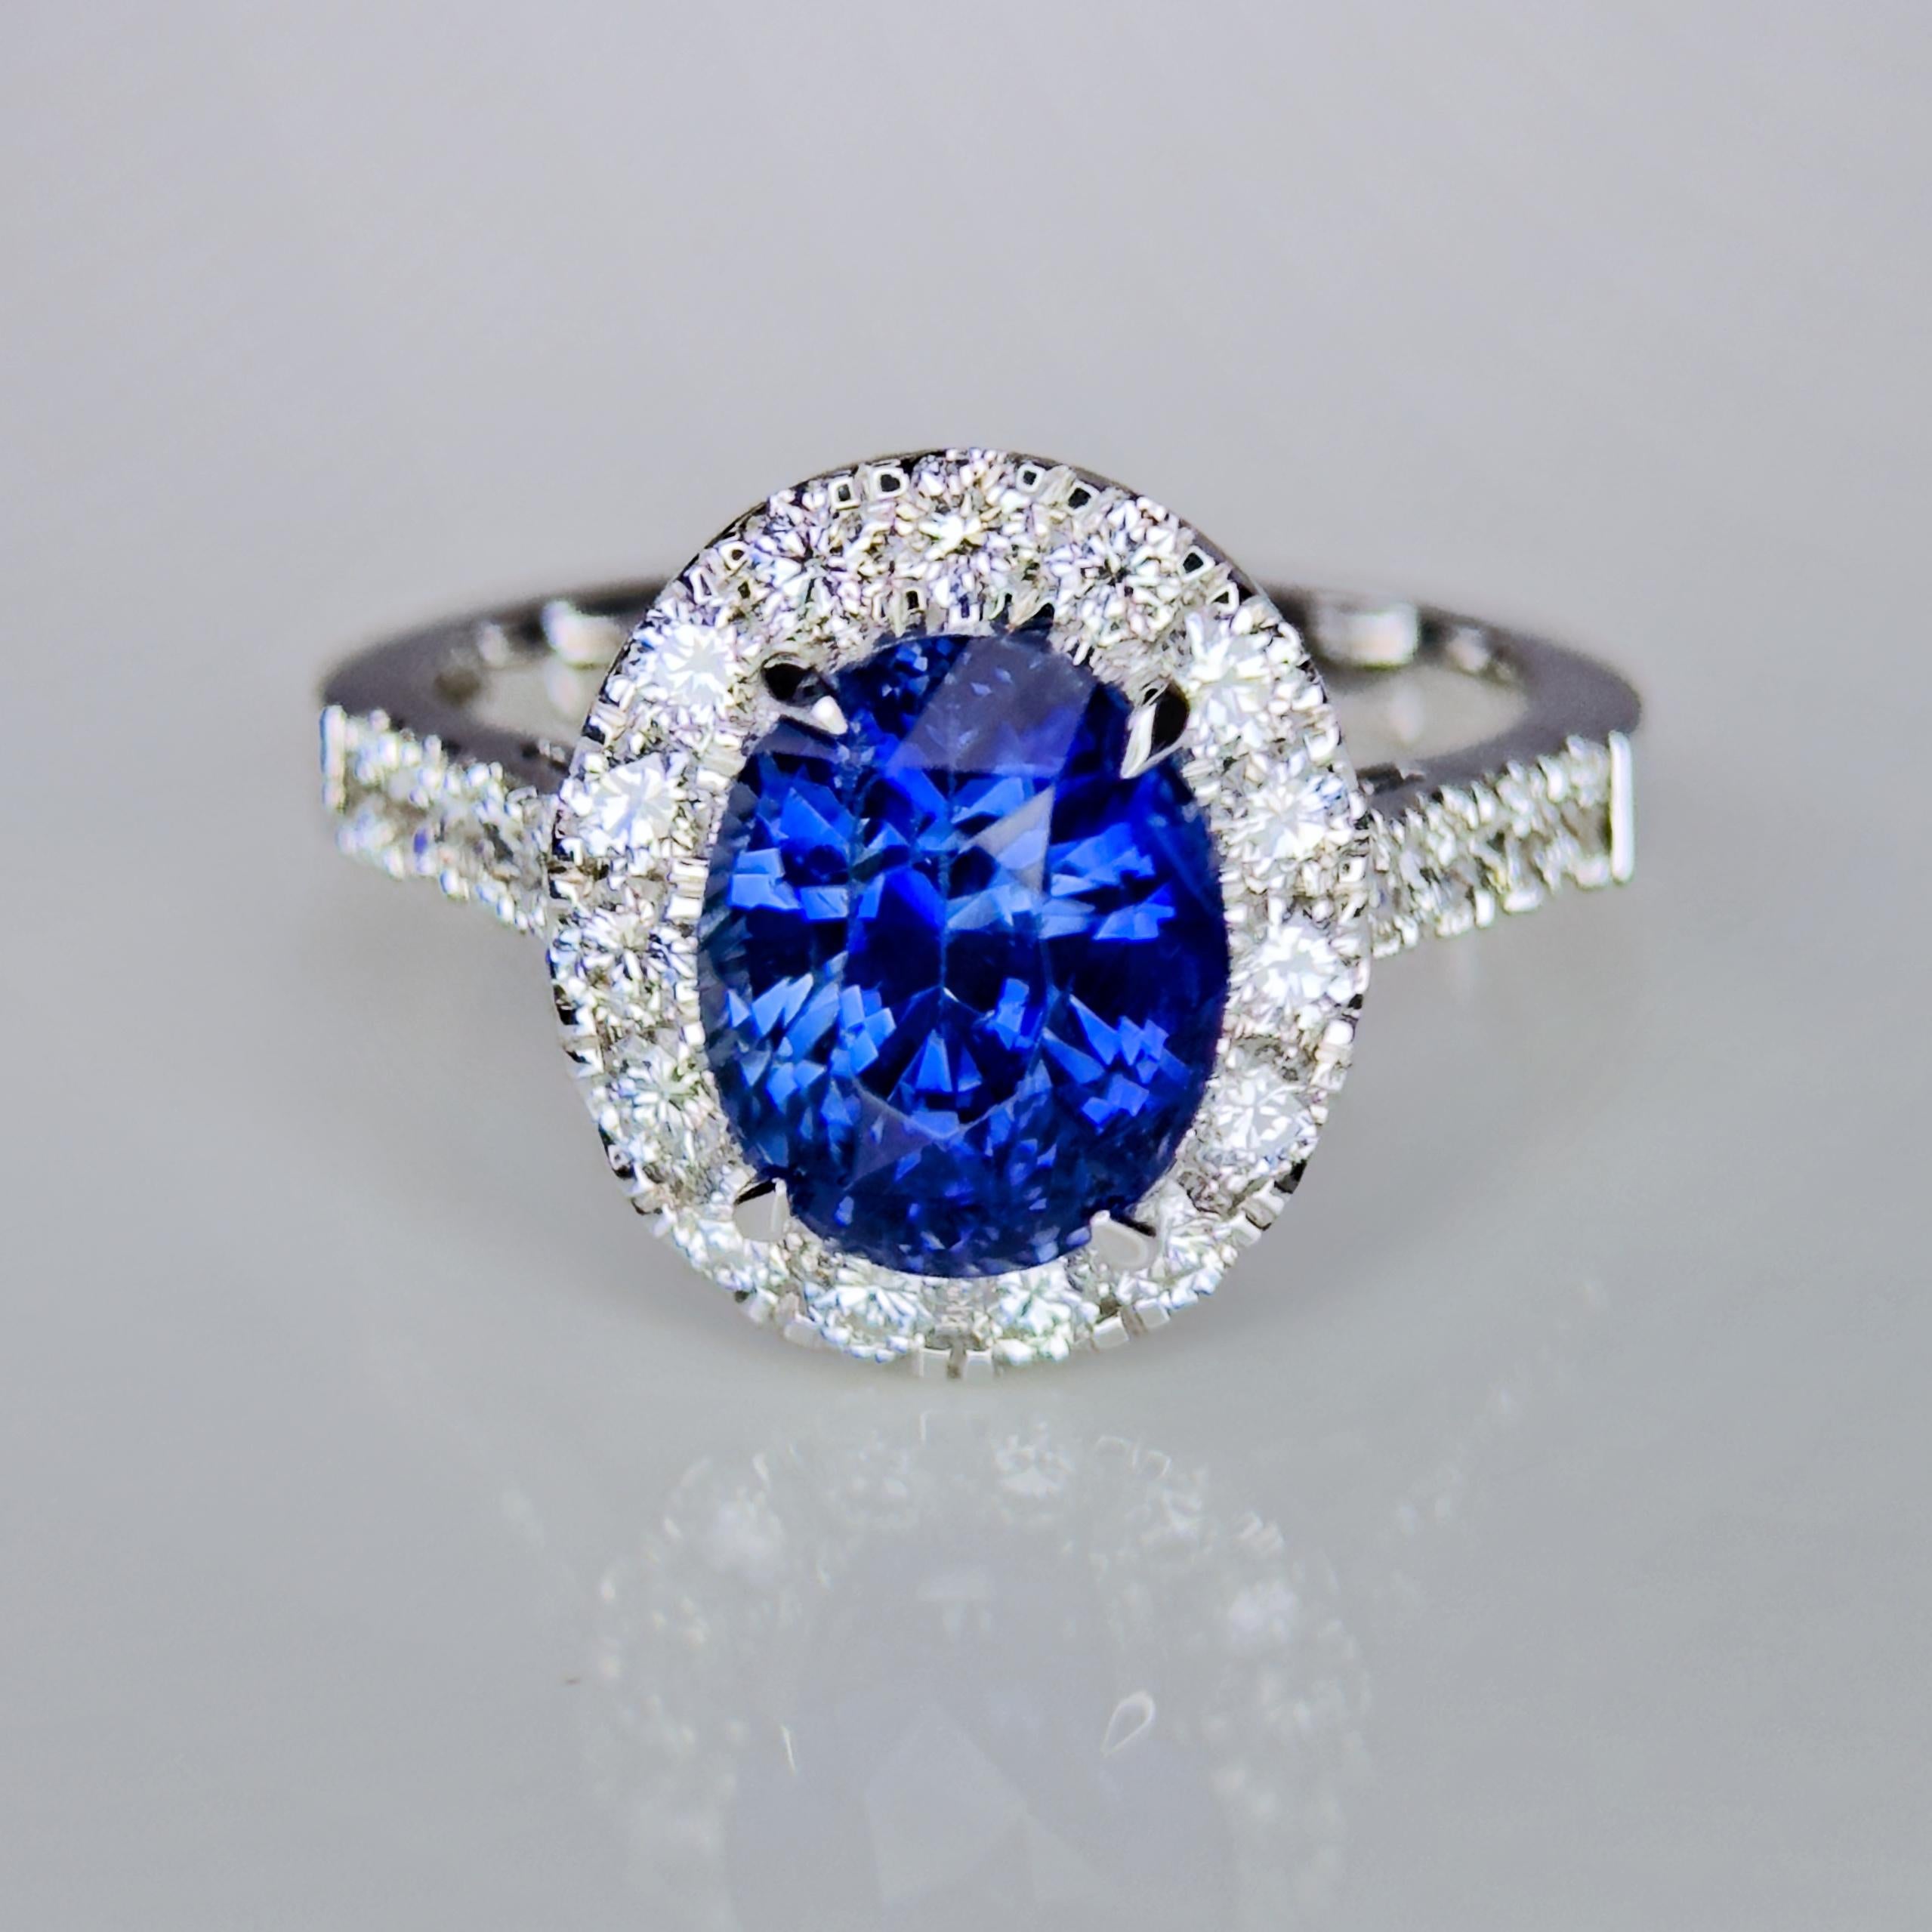 Stunning Royal Blue Kashmir Sapphire and Diamond halo ring, IGI Certified.

Centre Stone - Royal Blue Sapphire, 
Centre Stone Weight - 3.69 Carat, 
Centre Stone Origin  - Kashmir
IGI Report Number- 40J5212423

Total Number of Diamonds - 23,